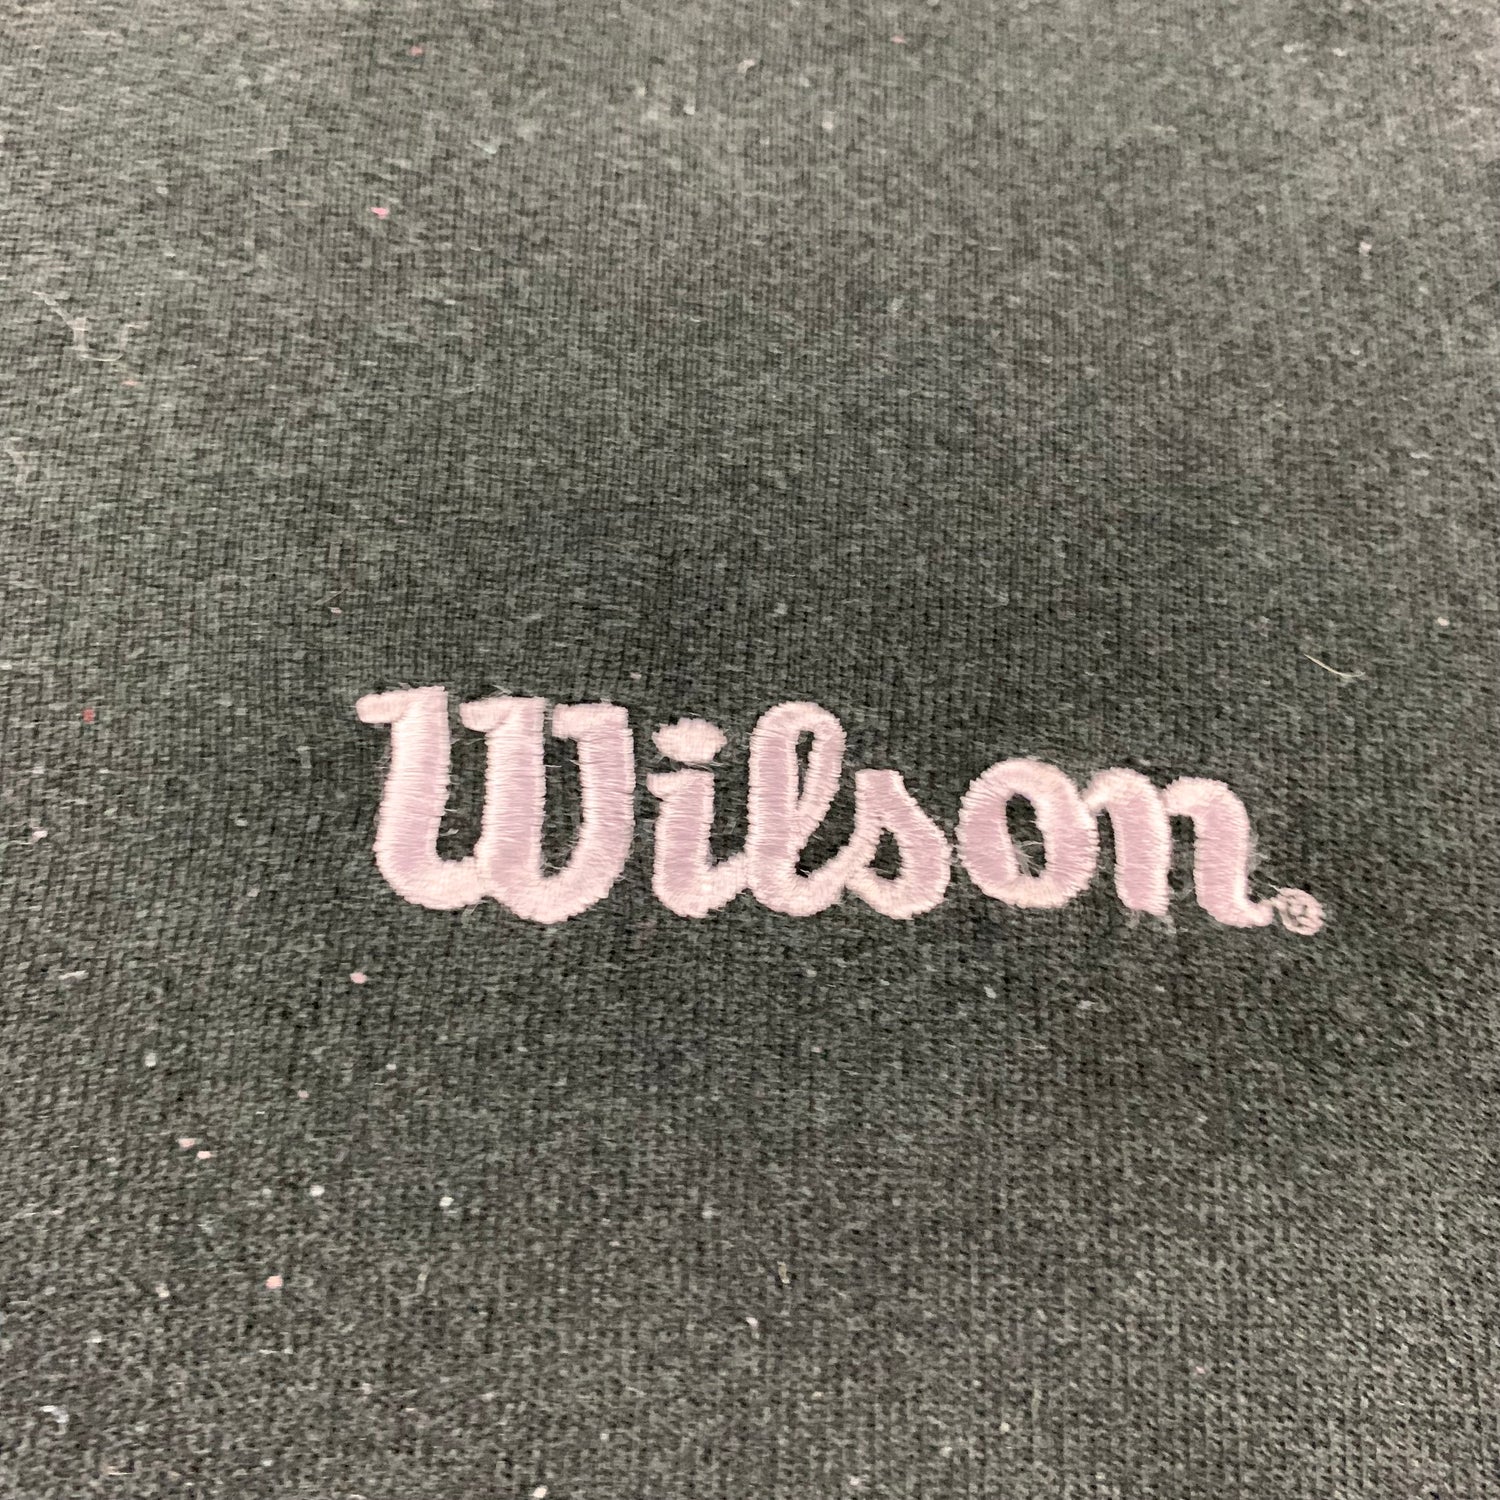 Vintage 1990s Wilson Sweatshirt size XL